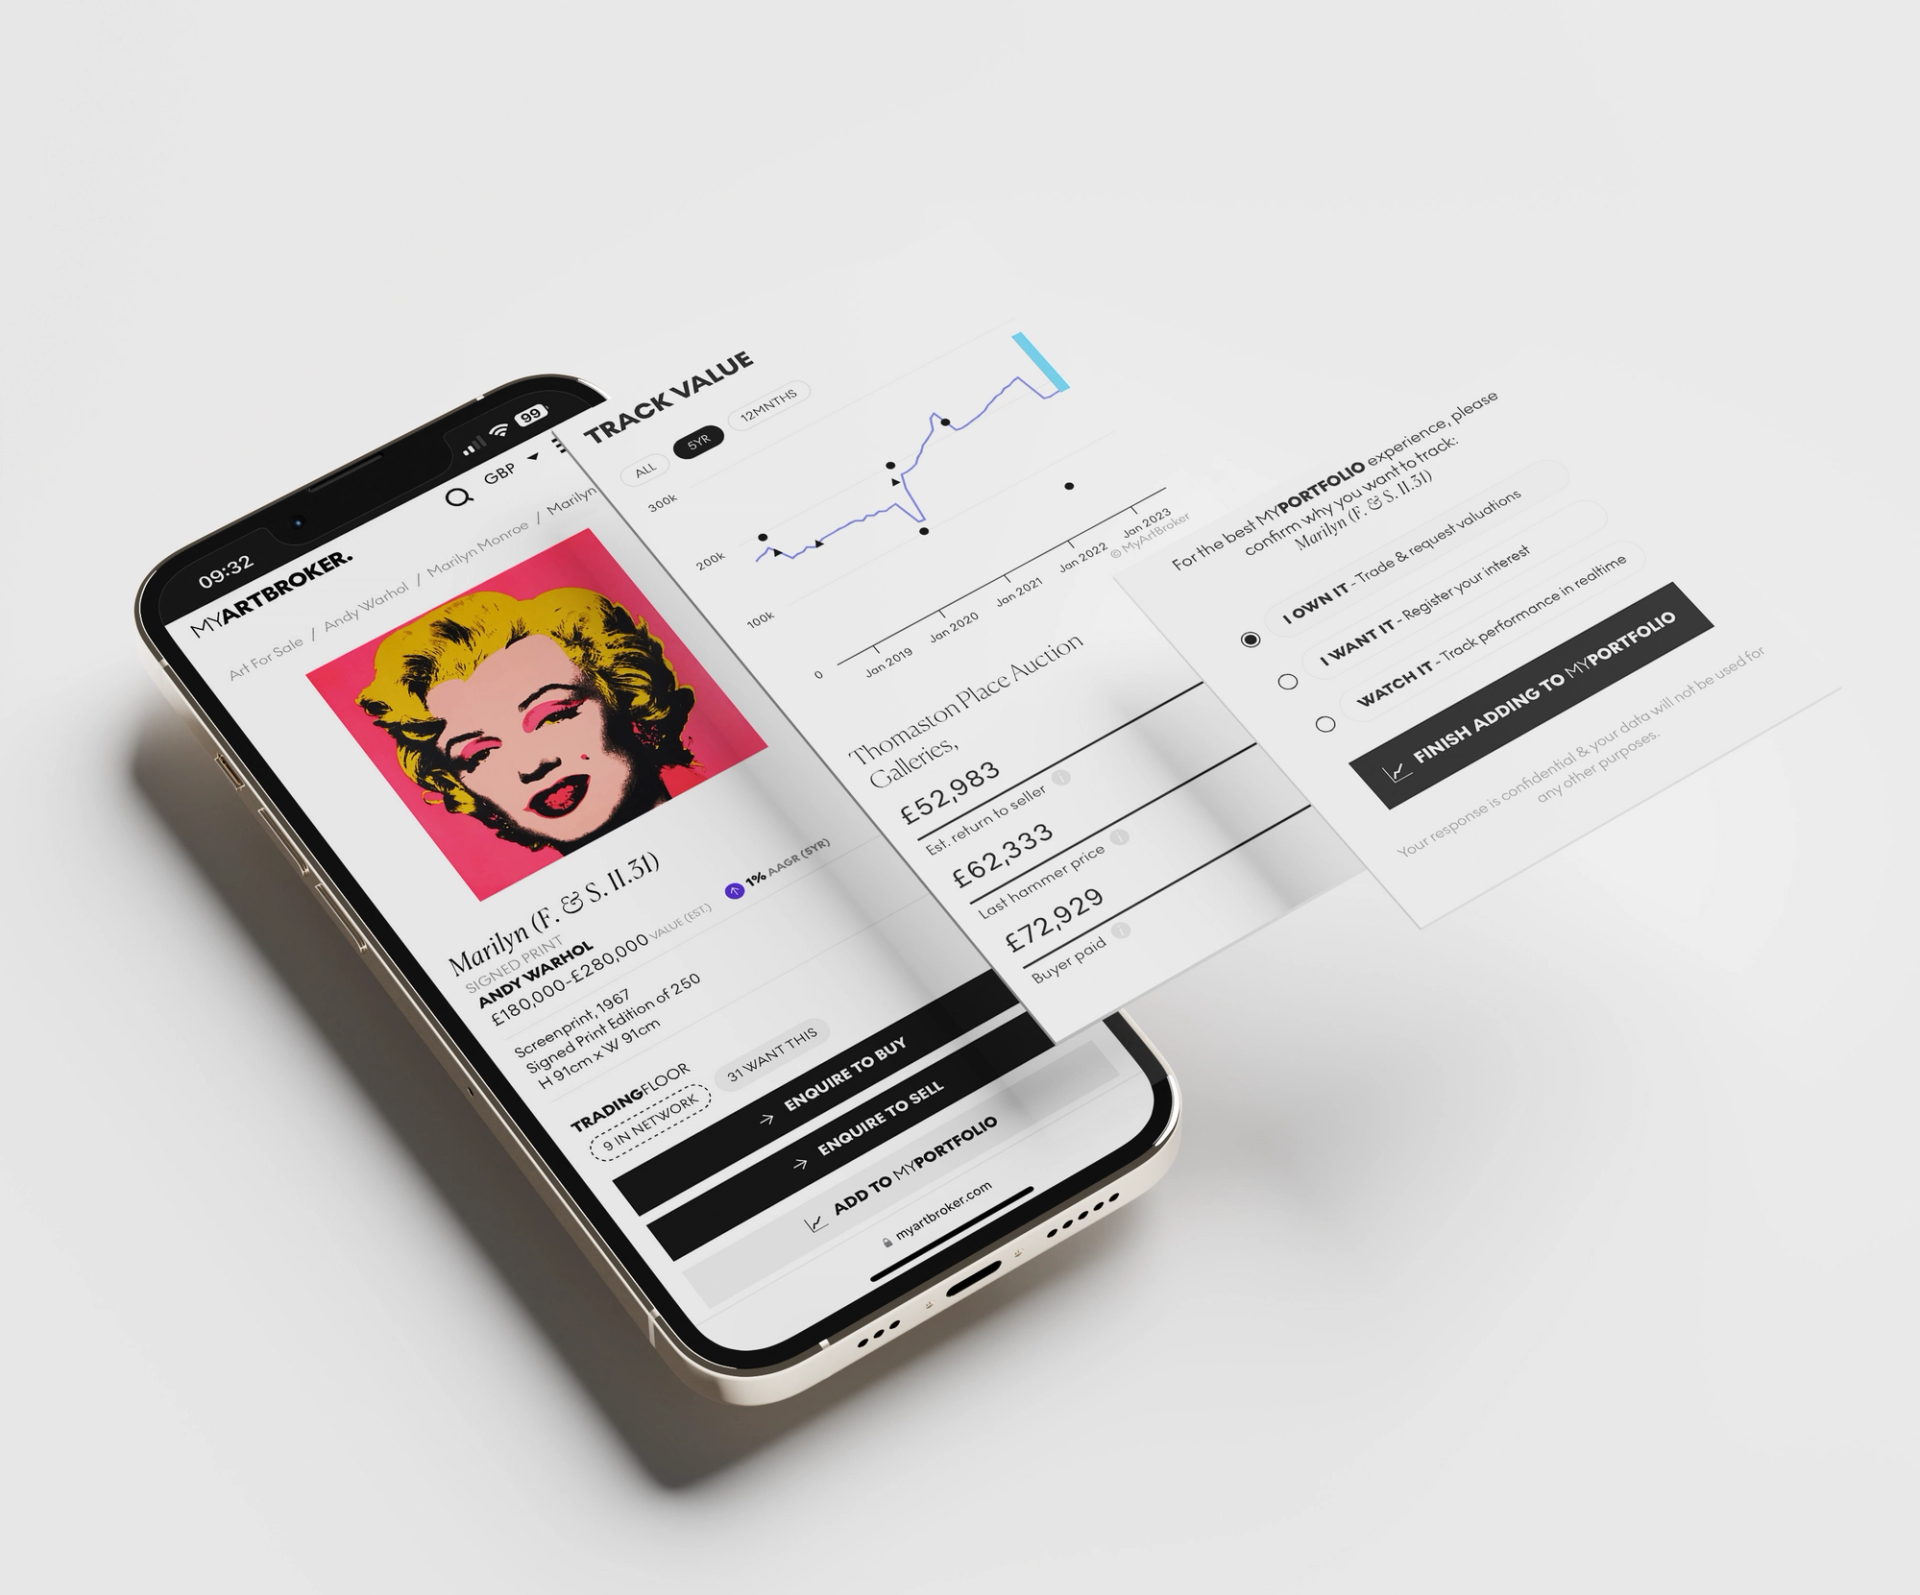 MyArtBroker’s MyPortfolio. A smartphone showing data on the prints market. 